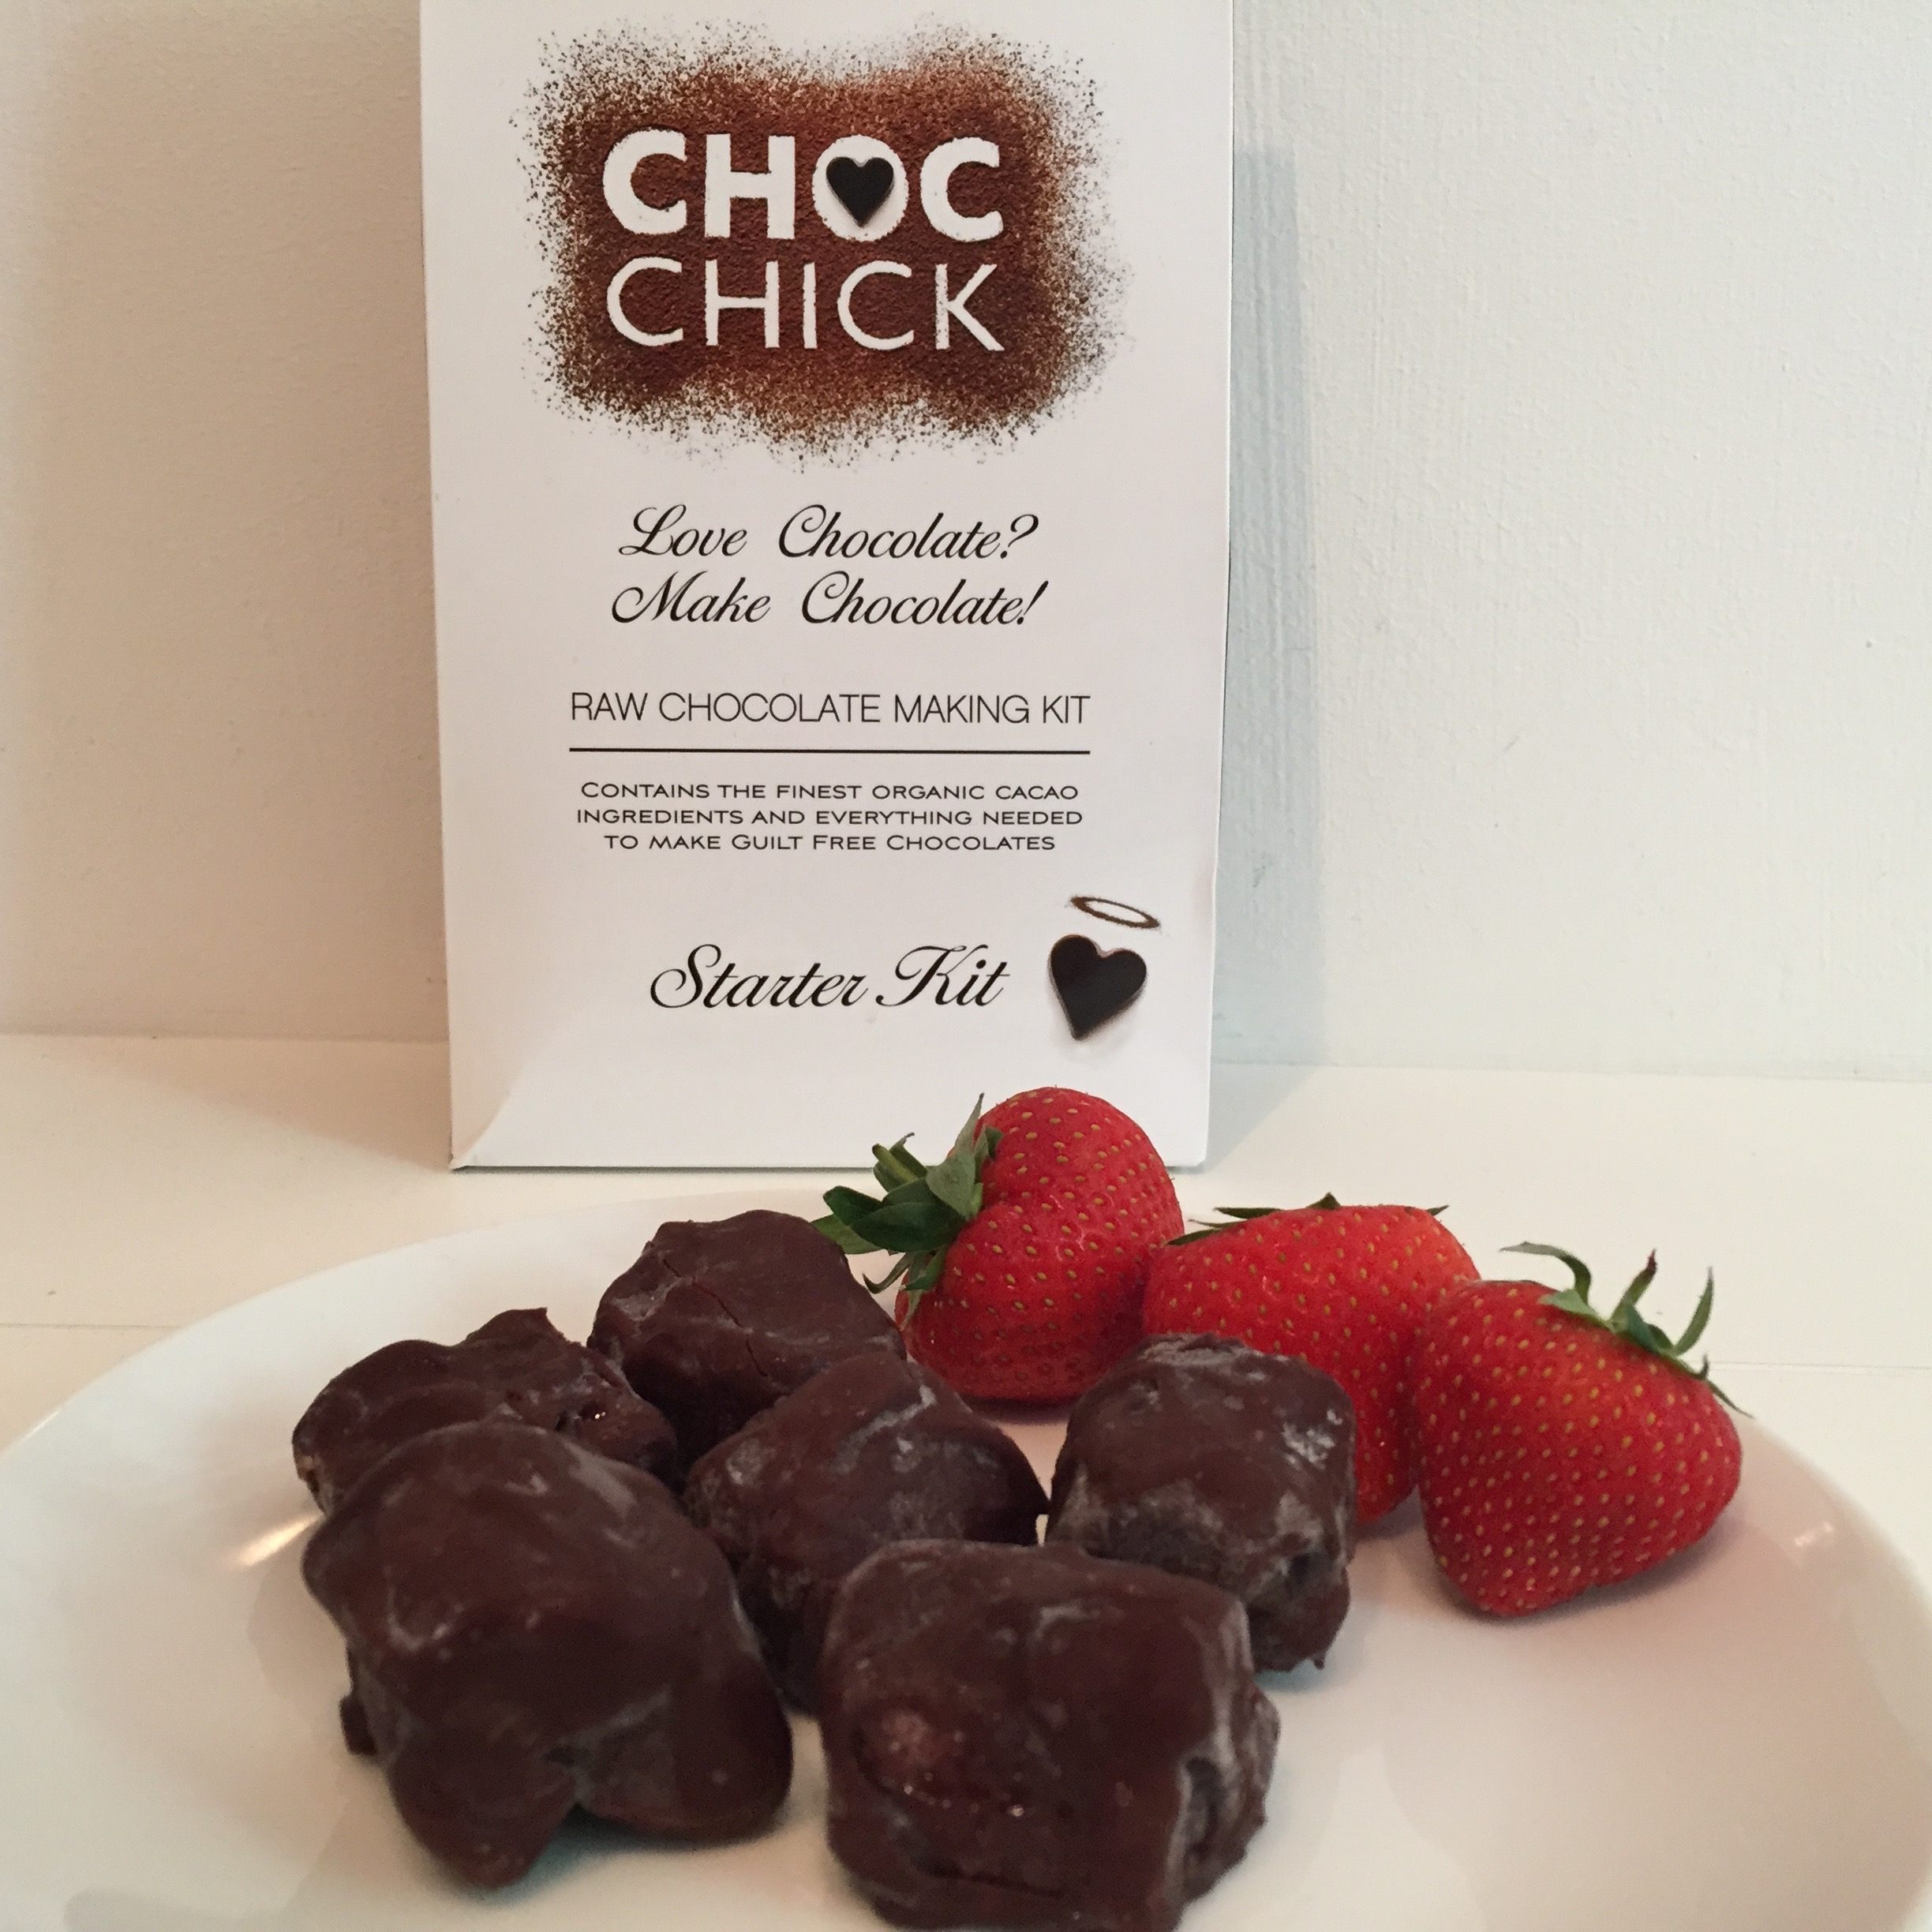 REVIEW: Choc Chick - Dairy Free Chocolate Making Kit